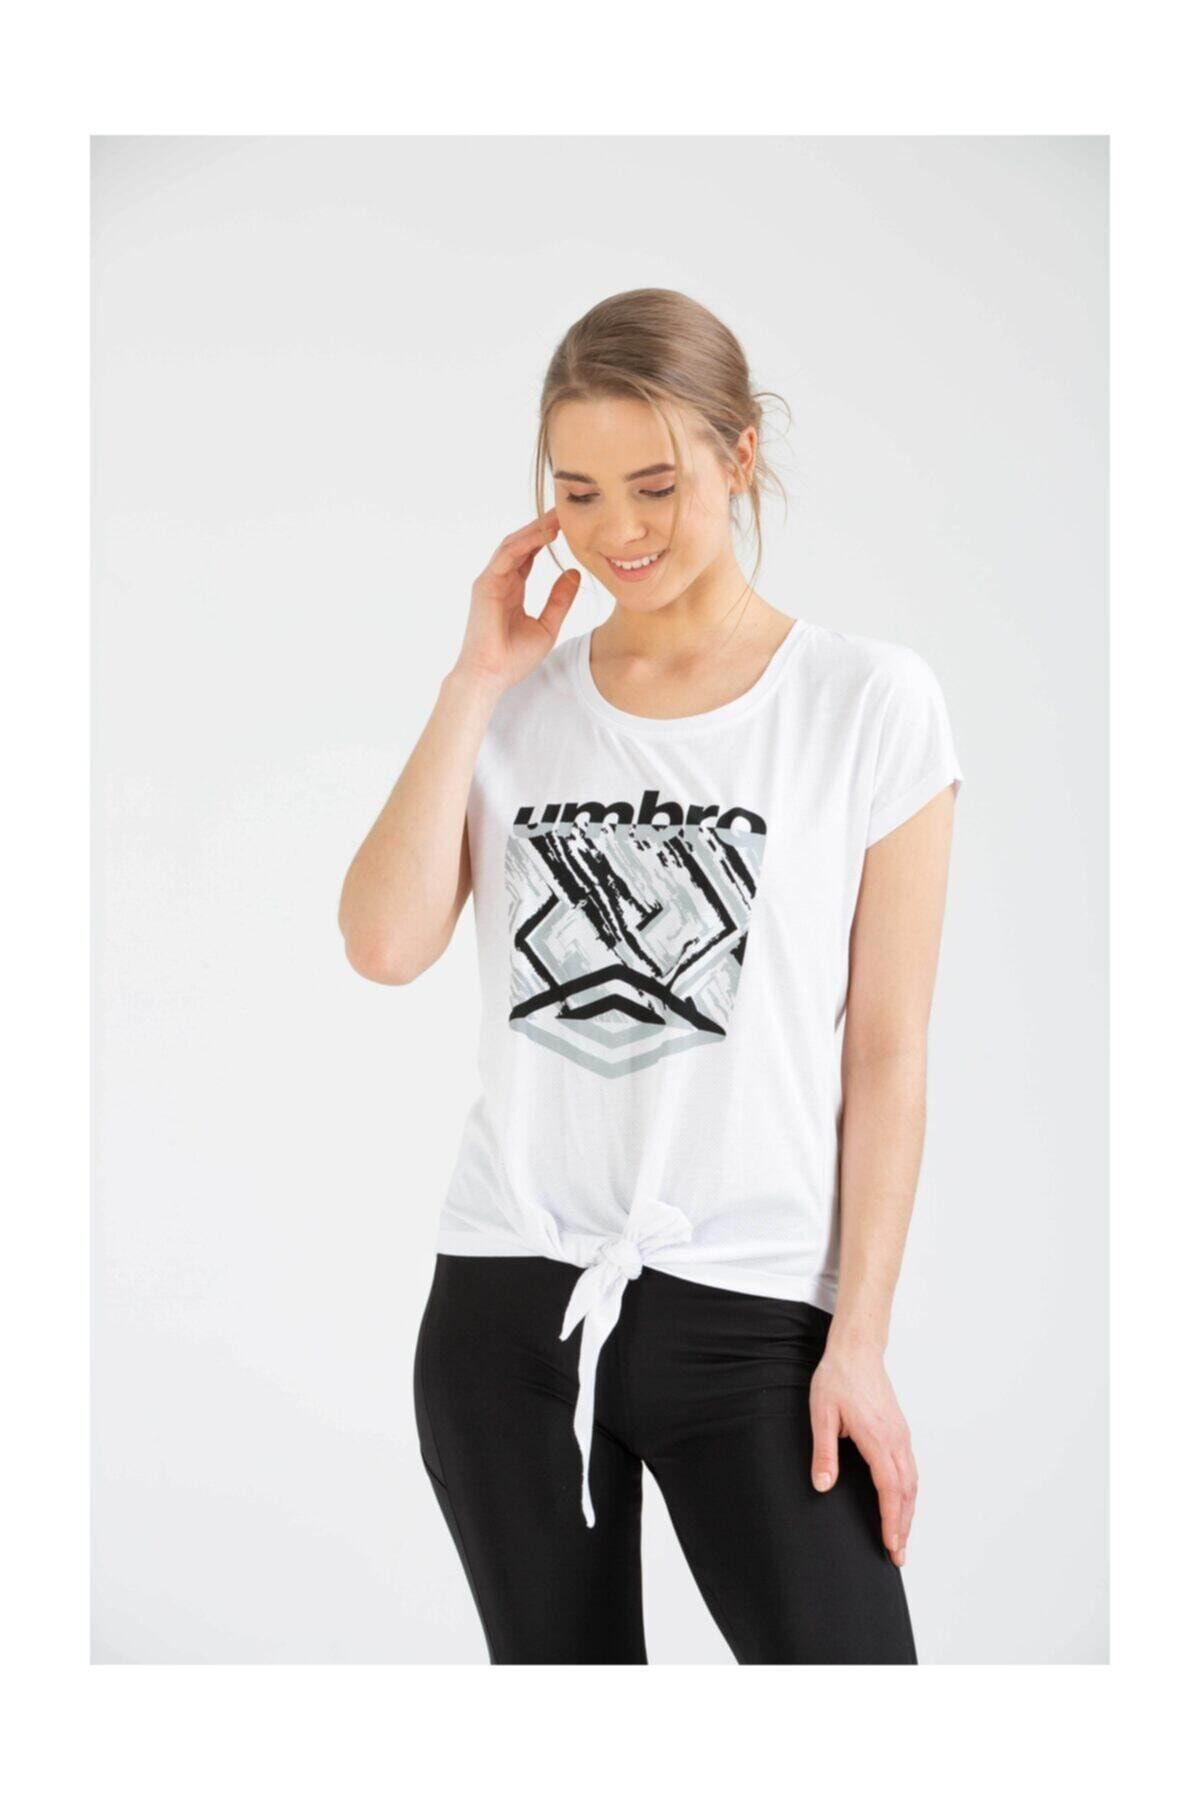 Umbro Kadın T-shirt Vf-0007 Pei Tshirt